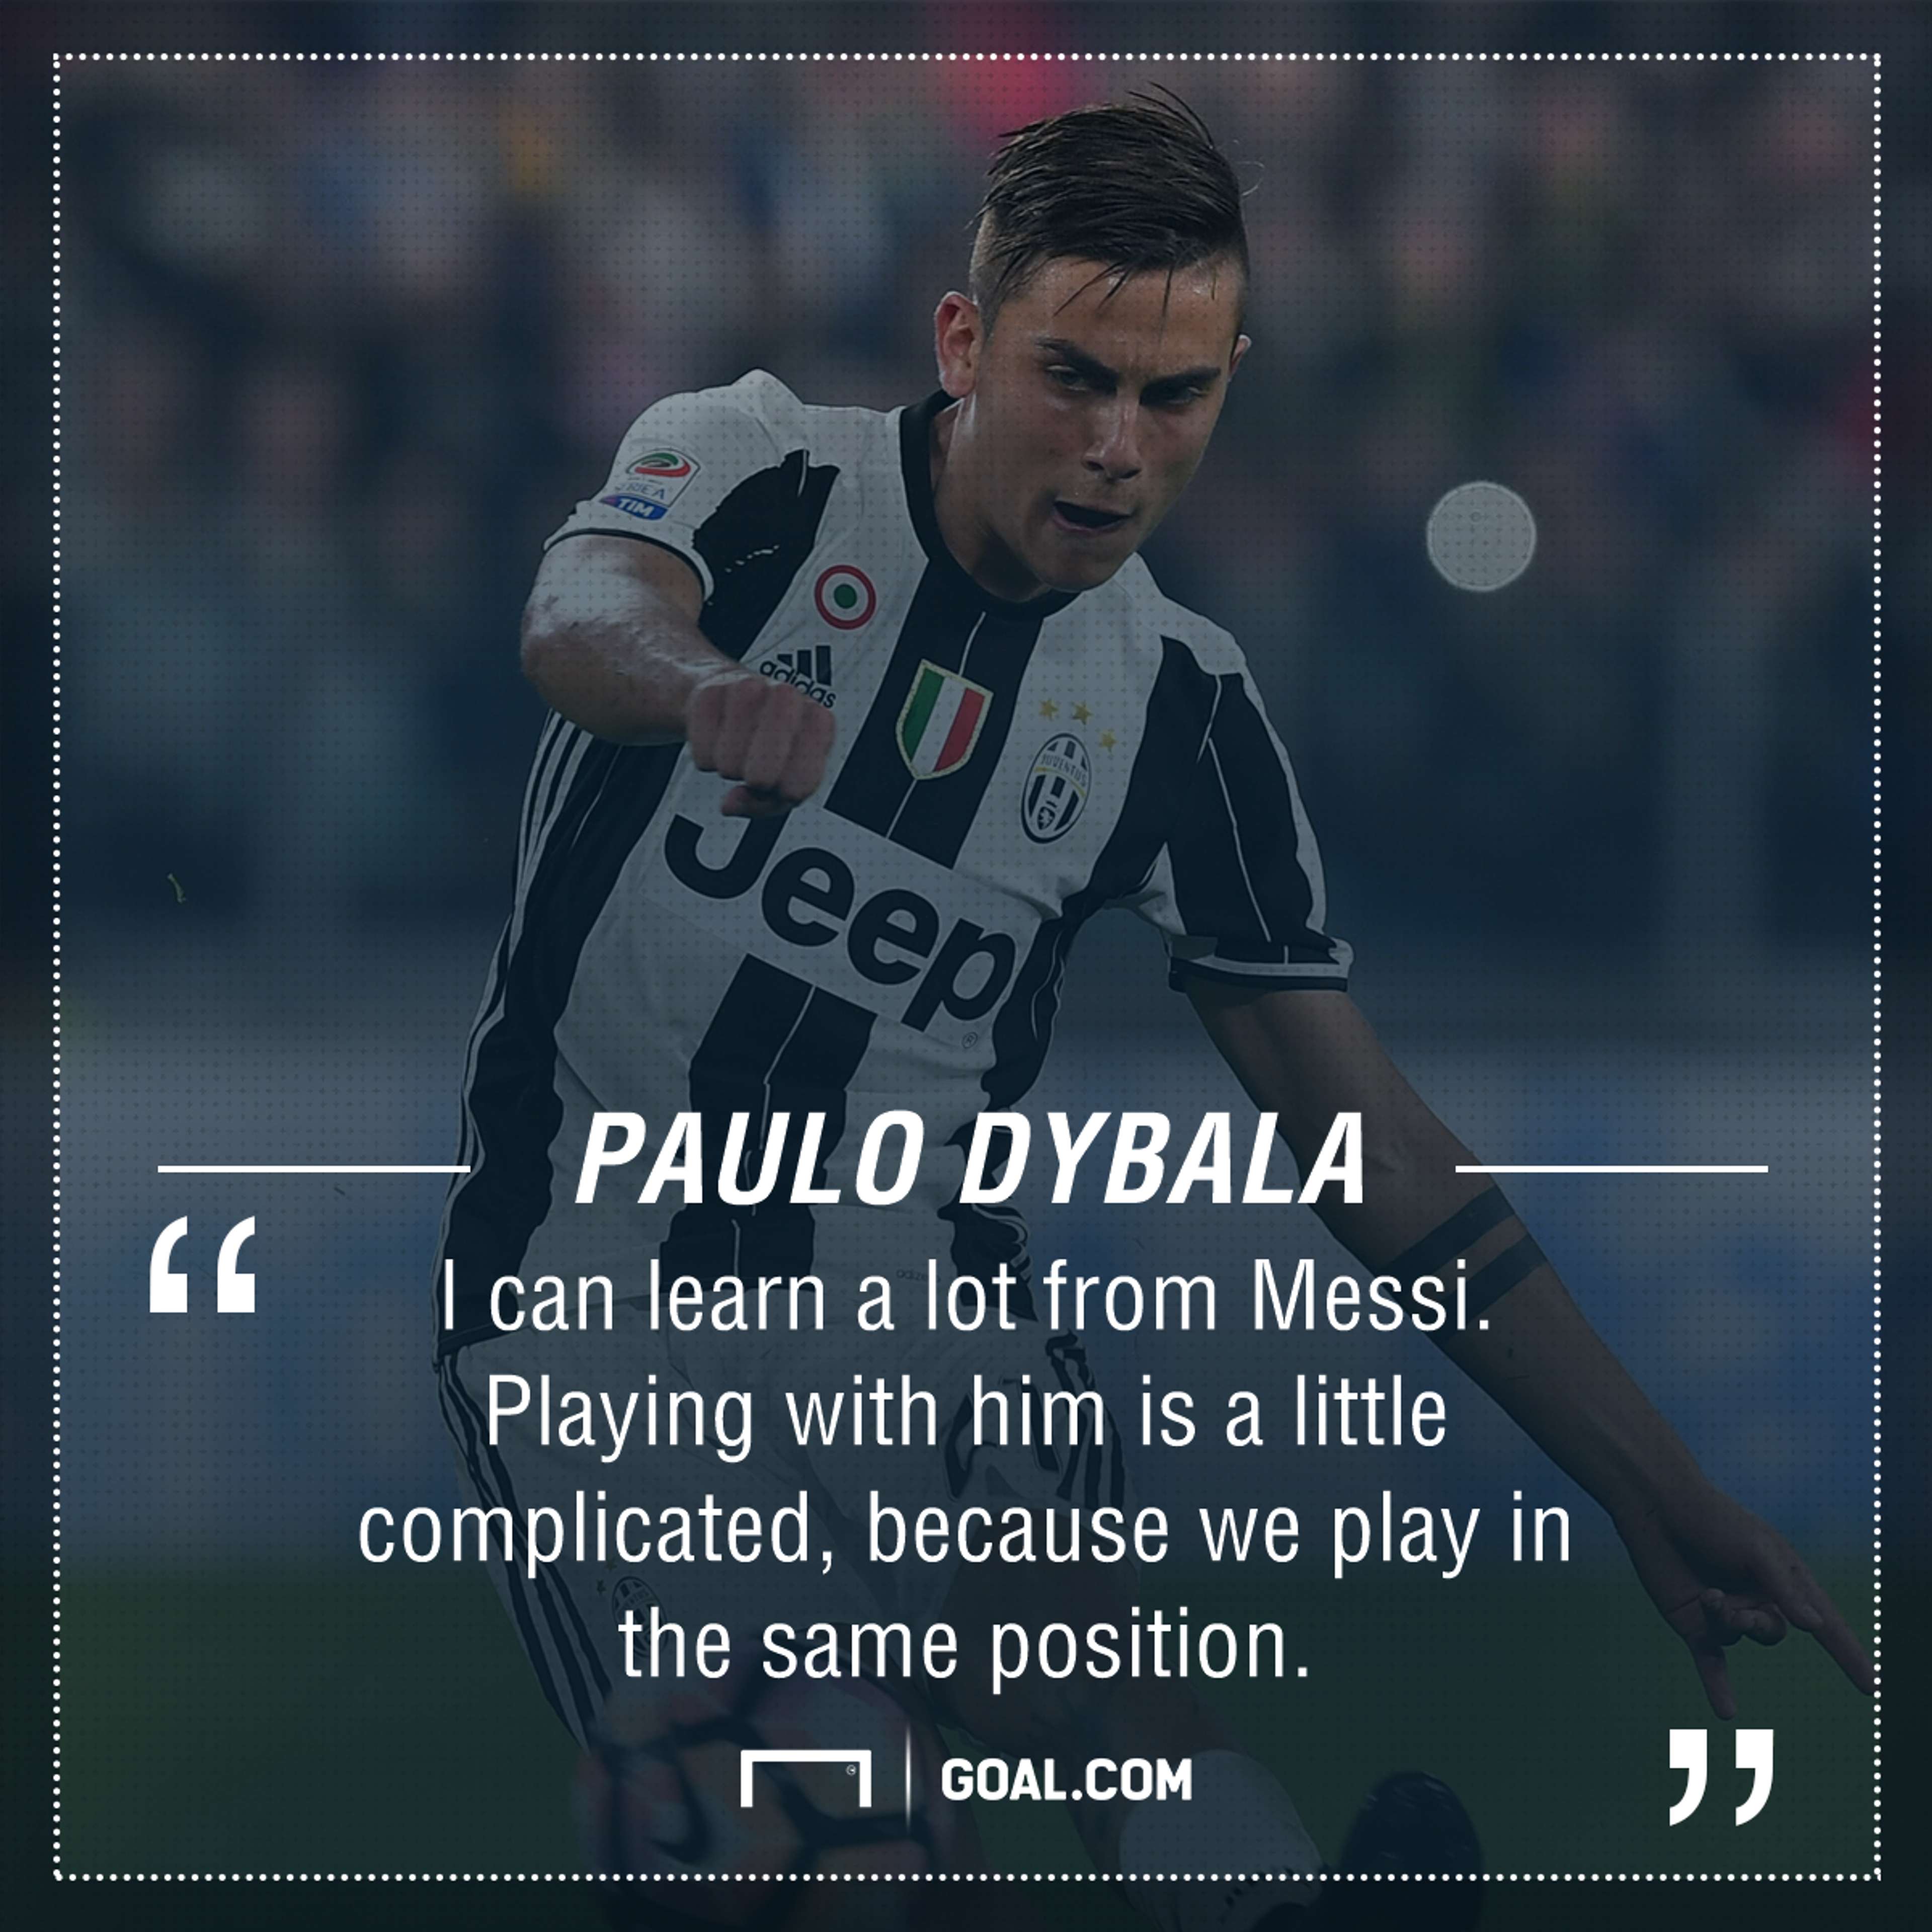 Dybala Messi quote